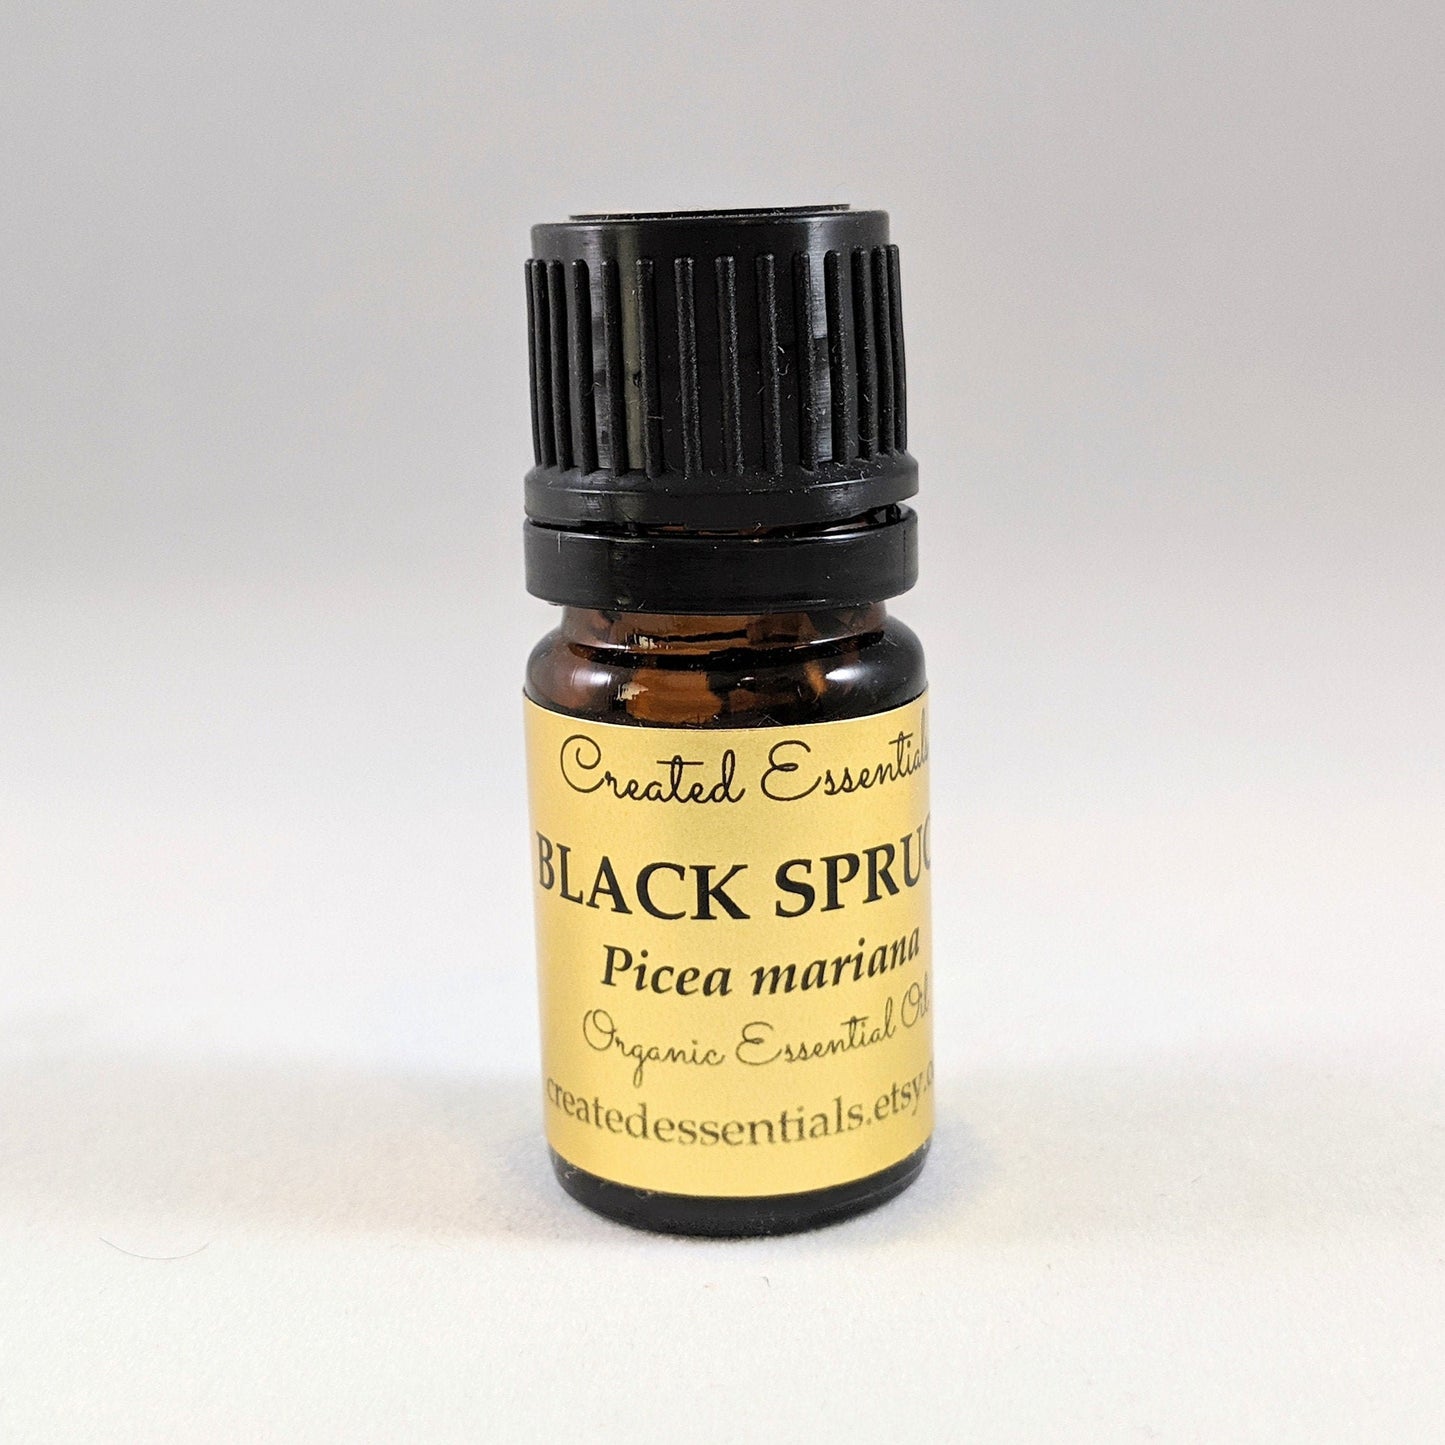 Black Spruce Essential Oil, Organic Essential Oil of Black Spruce, 100% Pure Essential Oil, Black Spruce Aromatherapy Oil